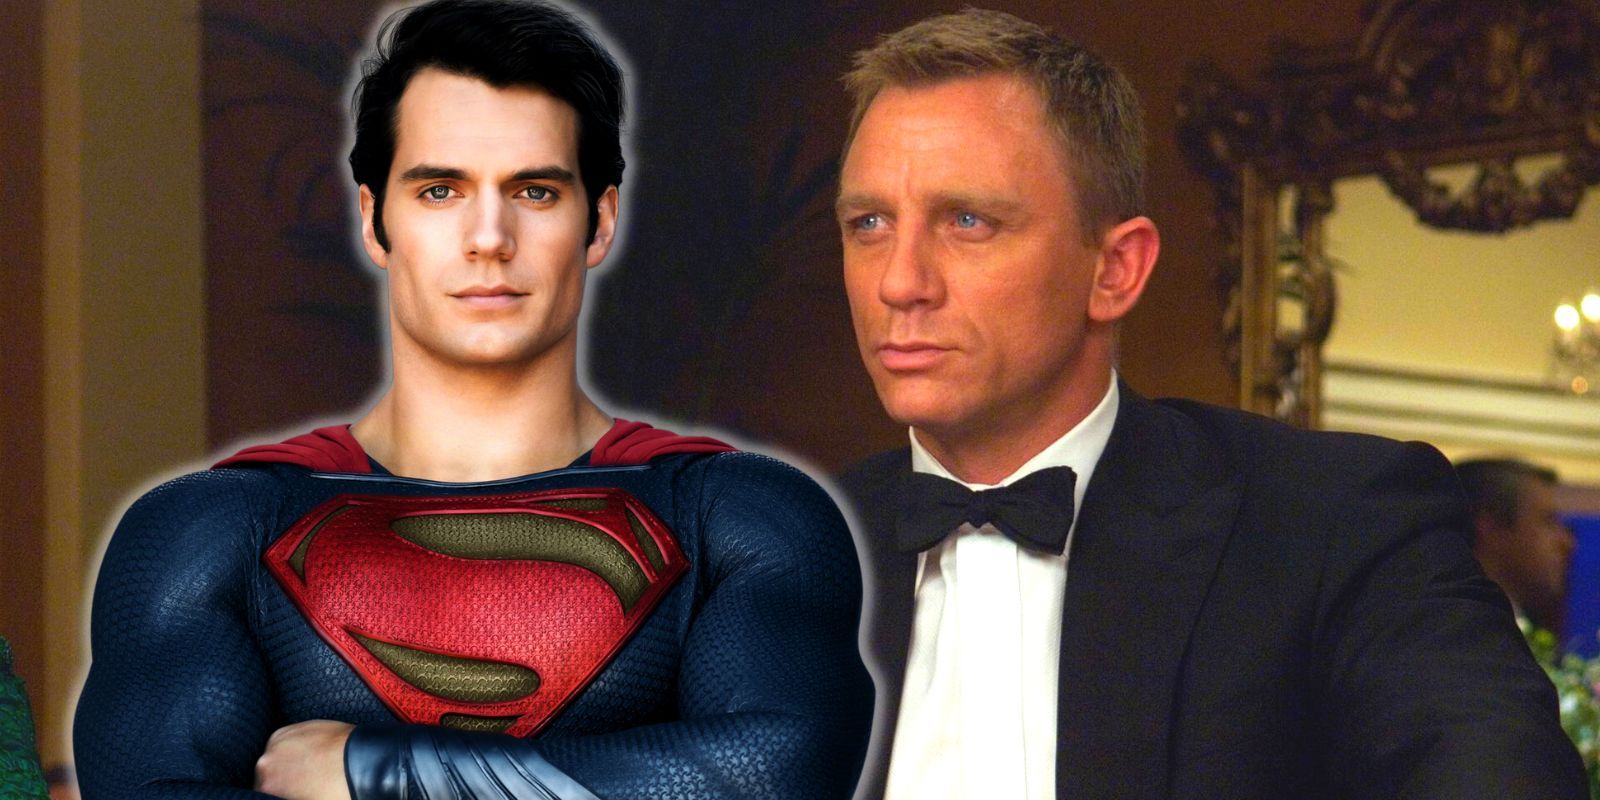 Custom image of Daniel Craig's James Bond staring down Henry Cavill's Superman